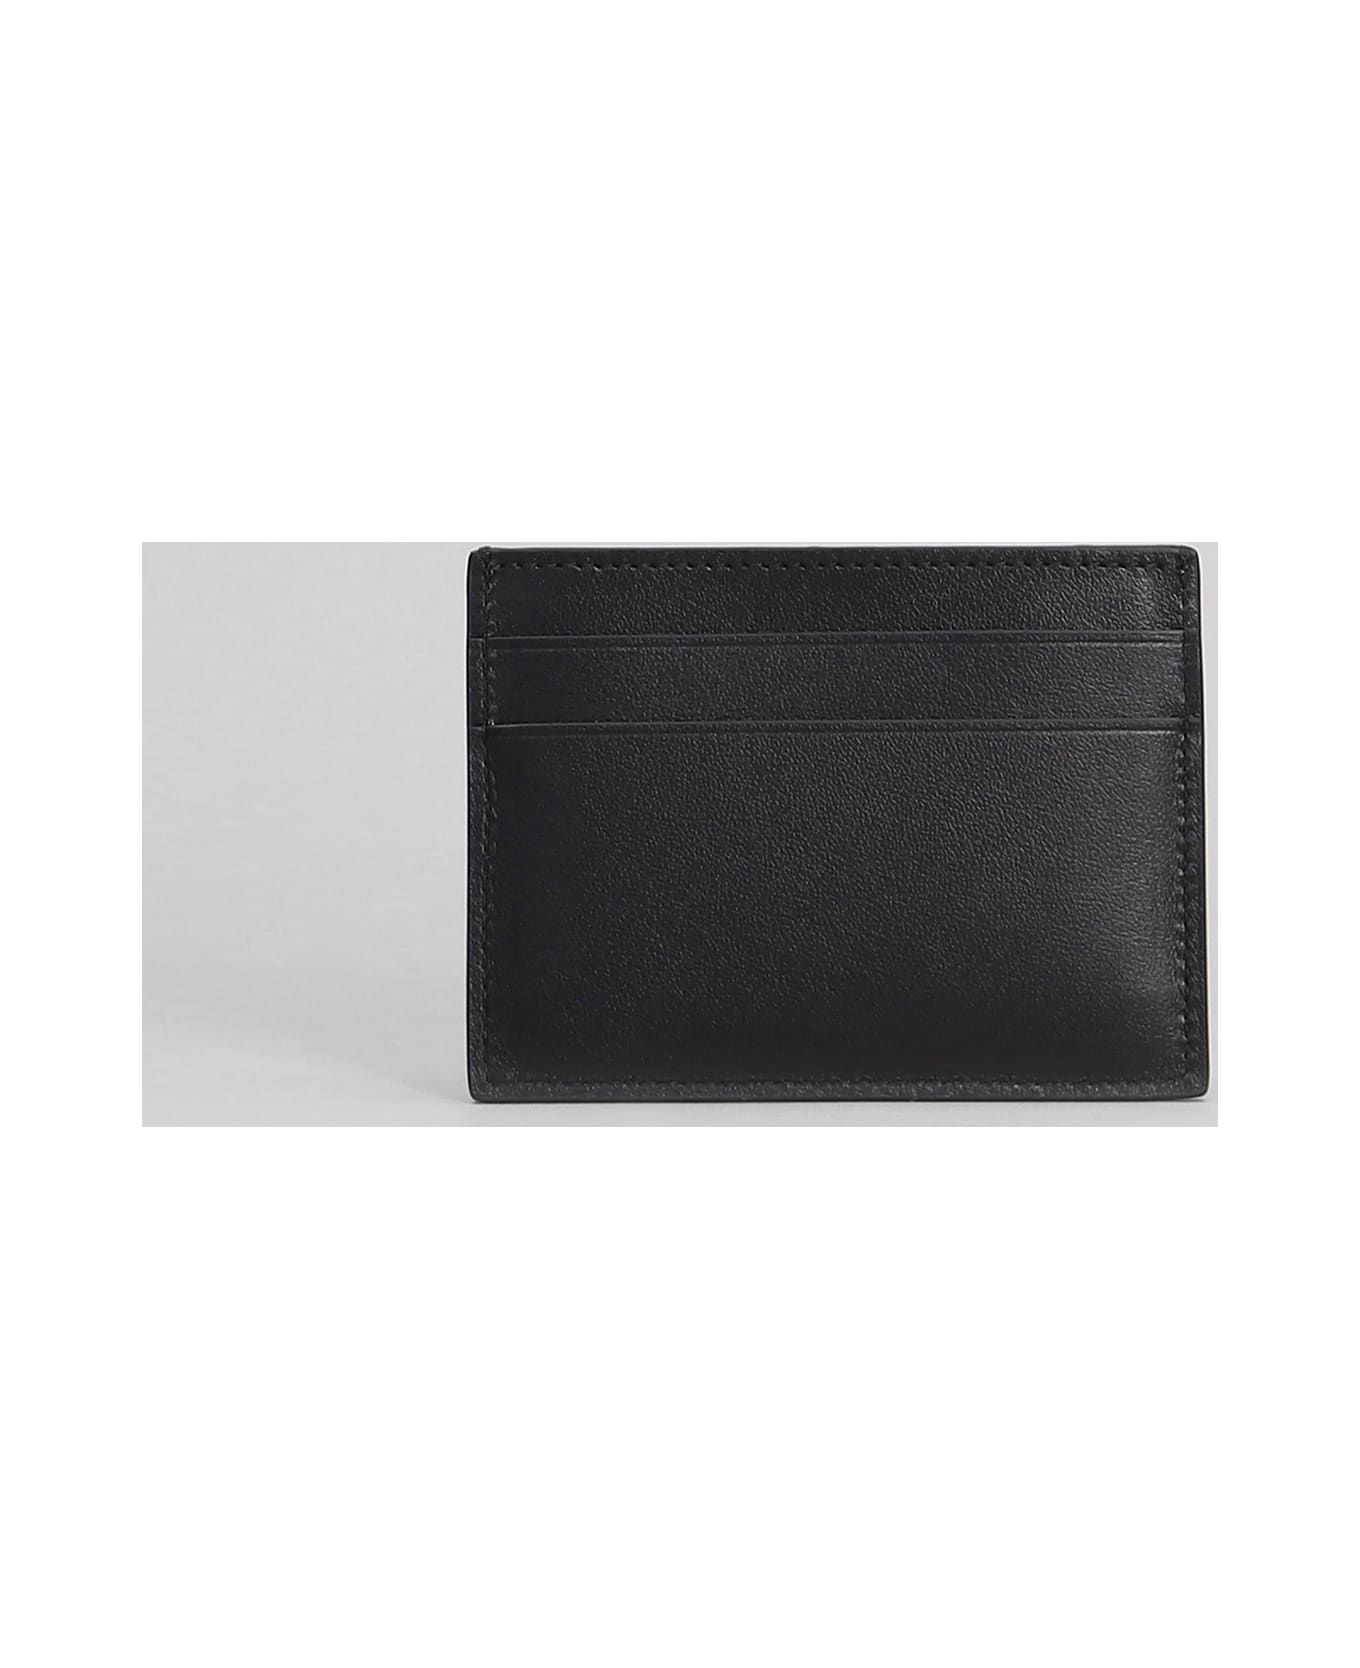 Balenciaga Wallet In Black Leather - black